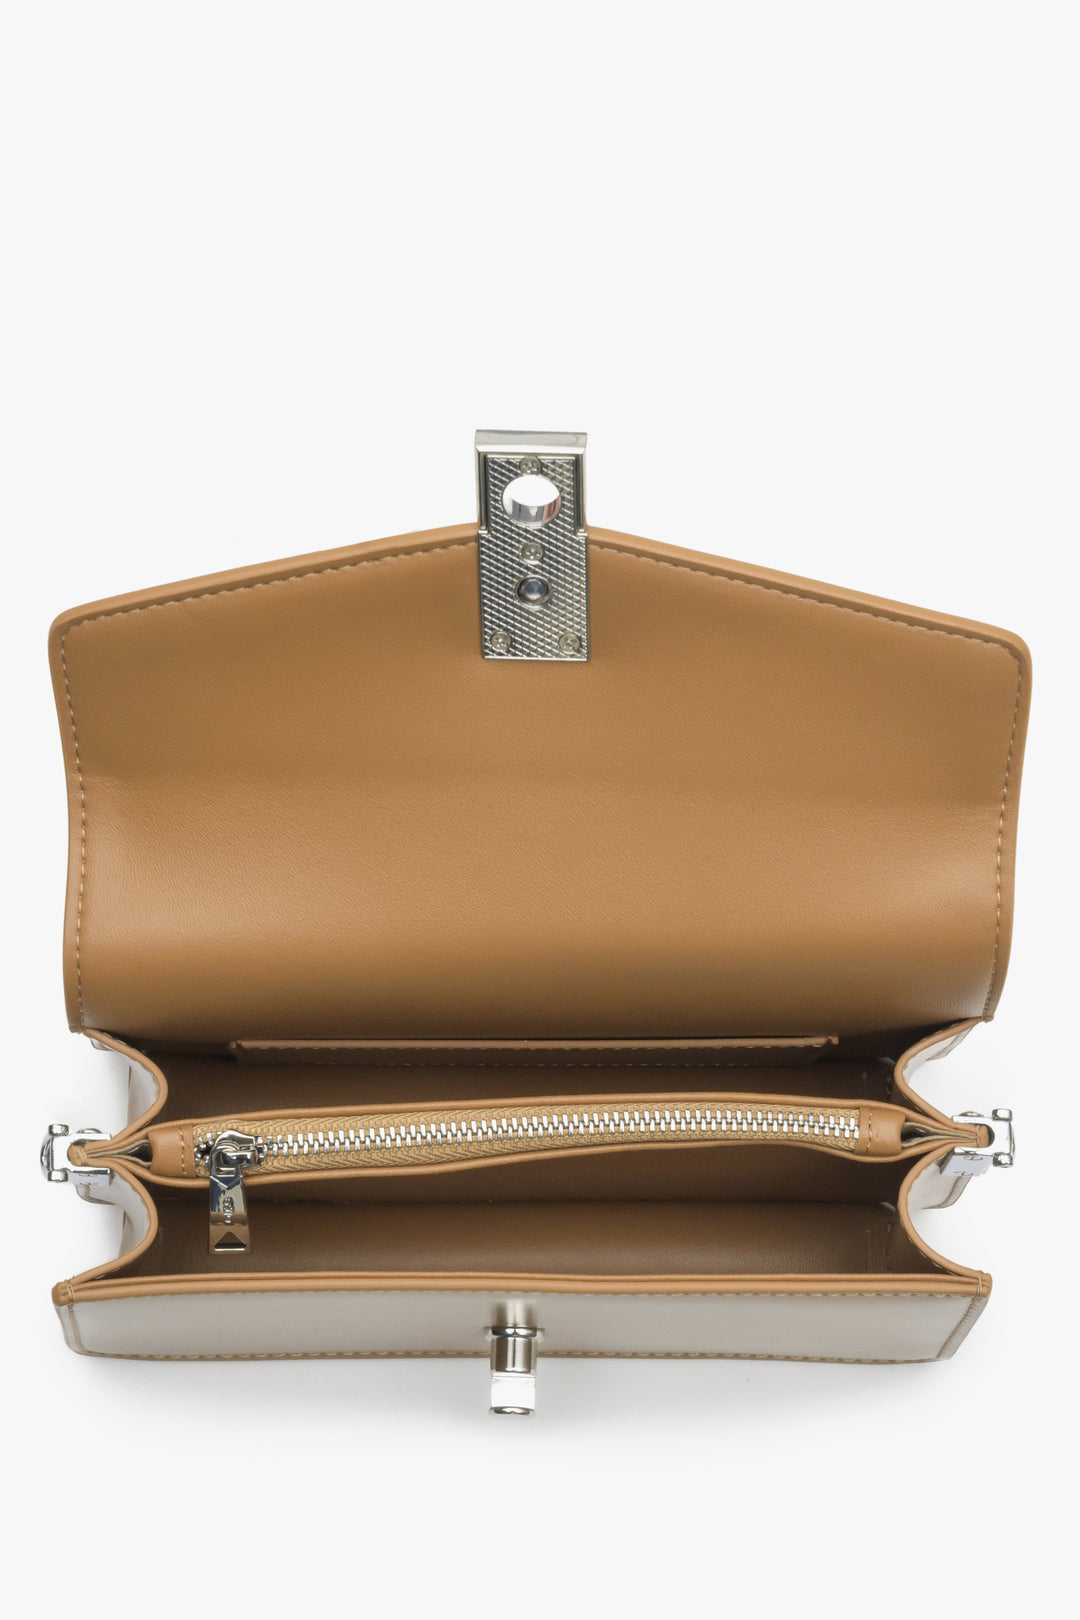 Women's Estro light brown leather bag - interior of the model.